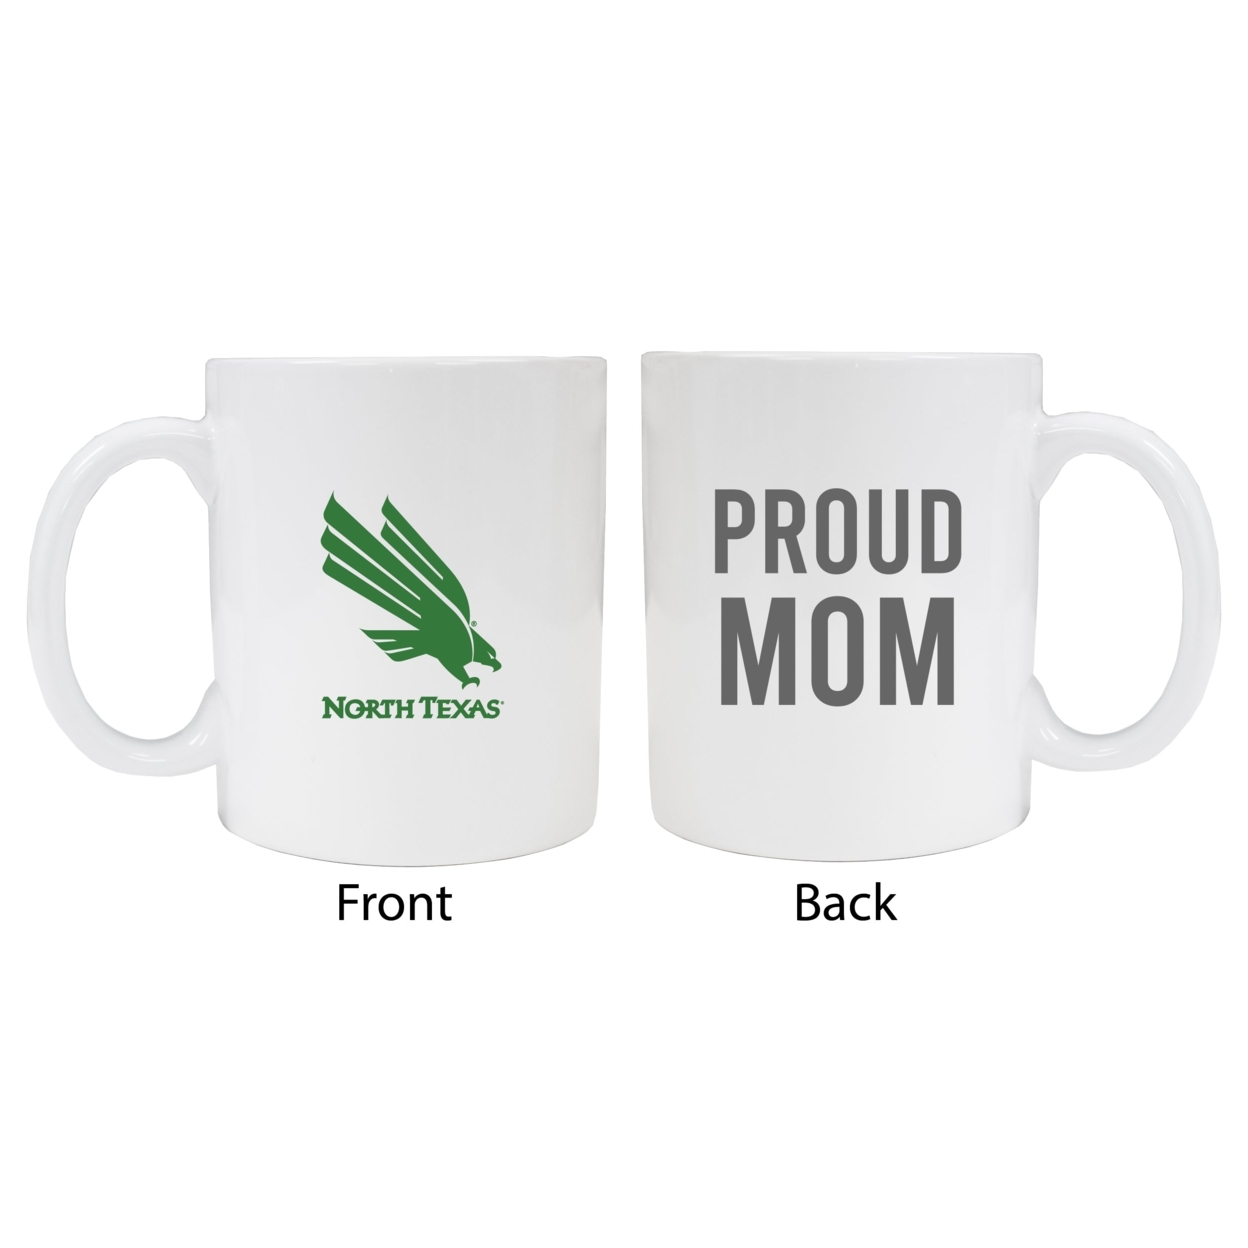 North Texas Proud Mom Ceramic Coffee Mug - White